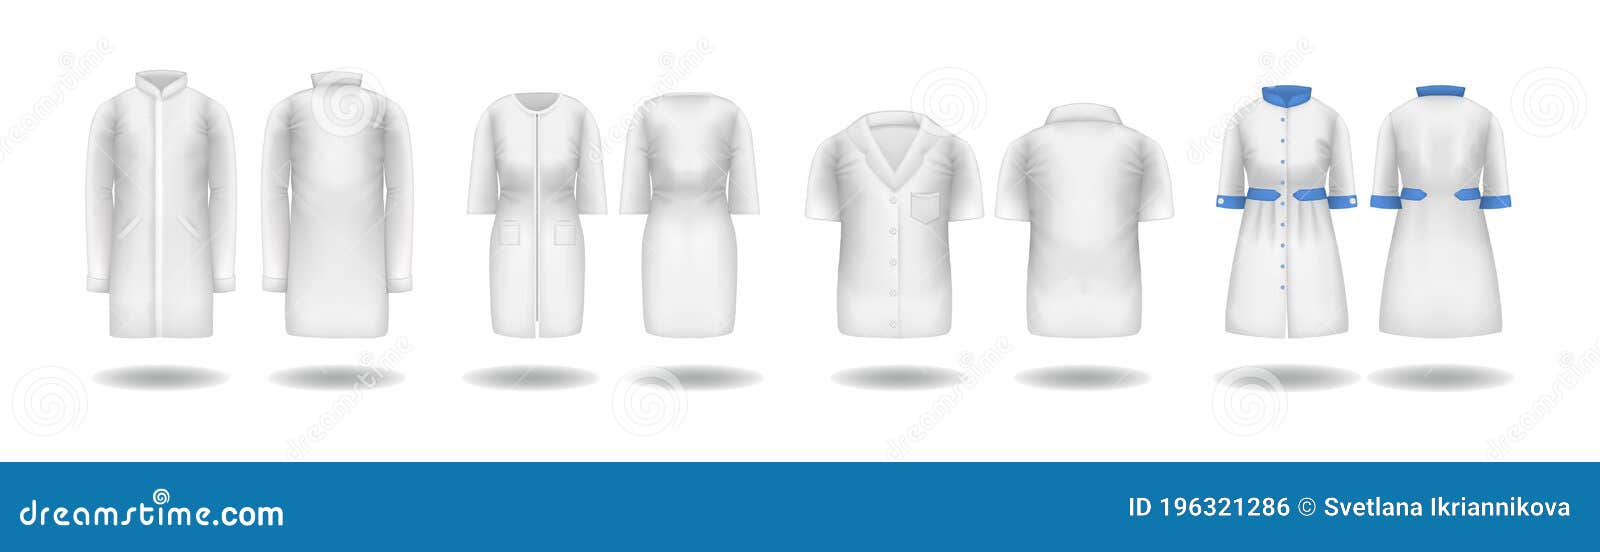 Download Realistic Doctor Coat Mock Up. Lab Uniform, Medical ...